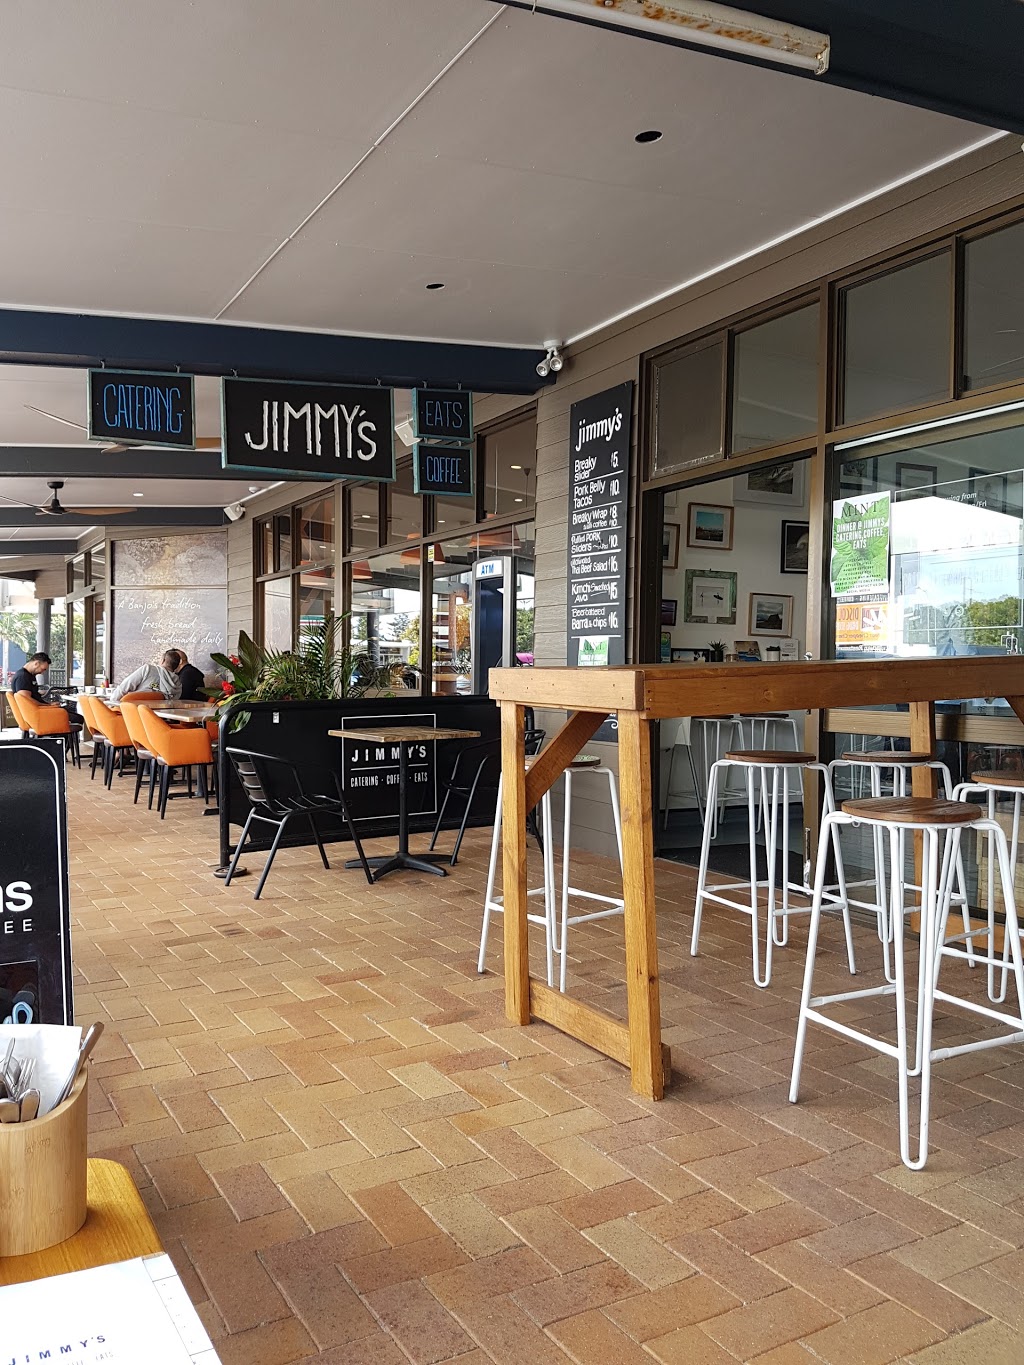 Jimmys - Catering - Coffee - Eats | cafe | 3/179 Nicklin Way, Warana QLD 4575, Australia | 0401561800 OR +61 401 561 800